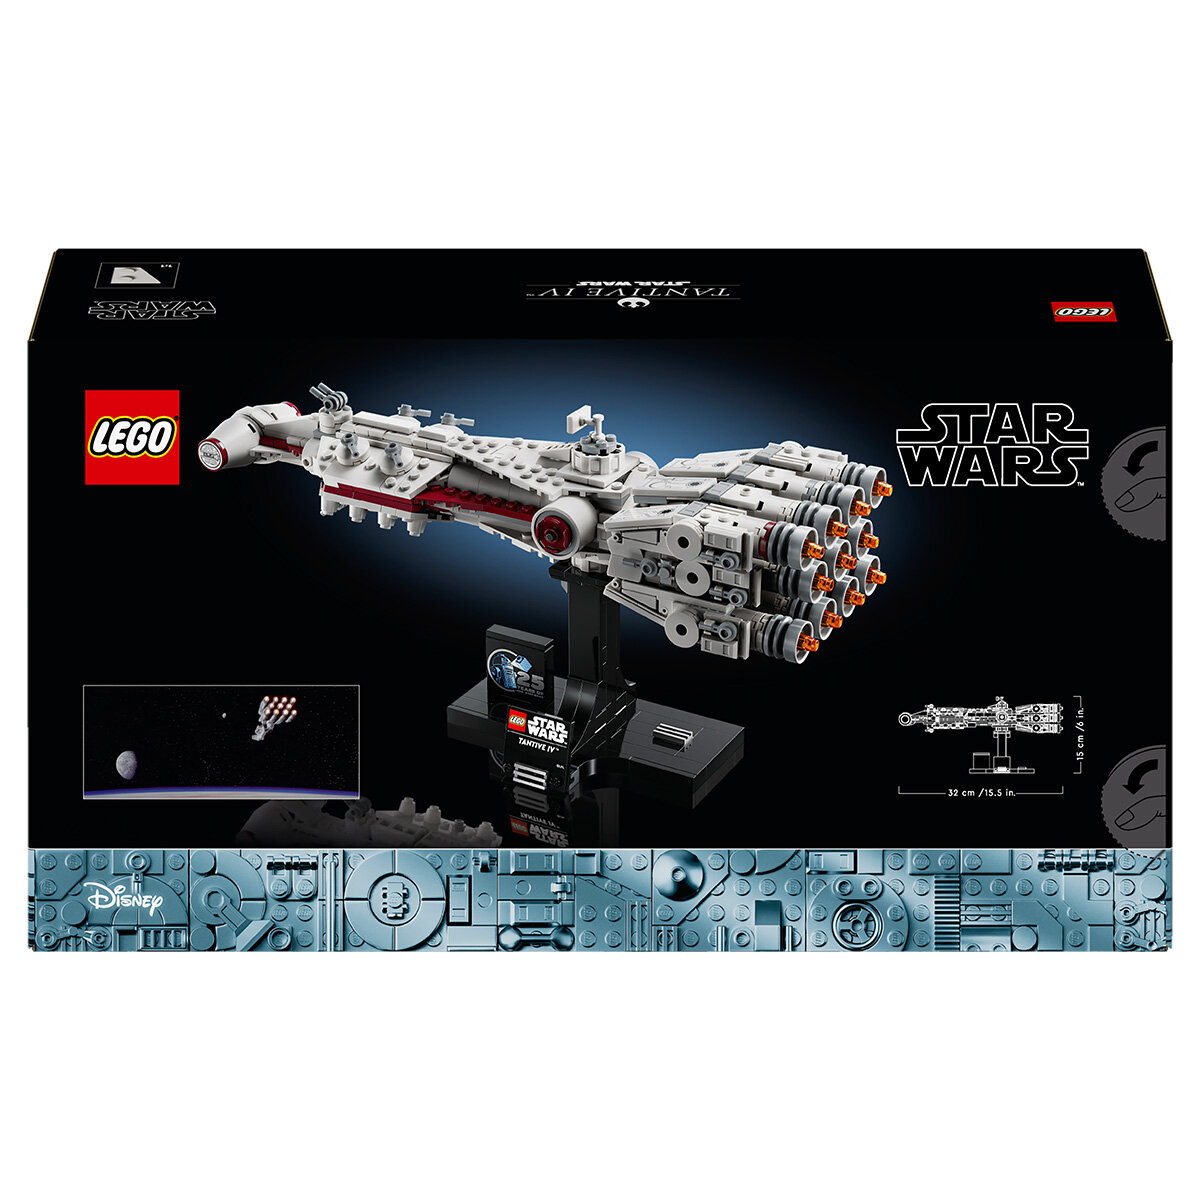 Buy LEGO Star Wars A New Hope Box Image at Costco.co.uk